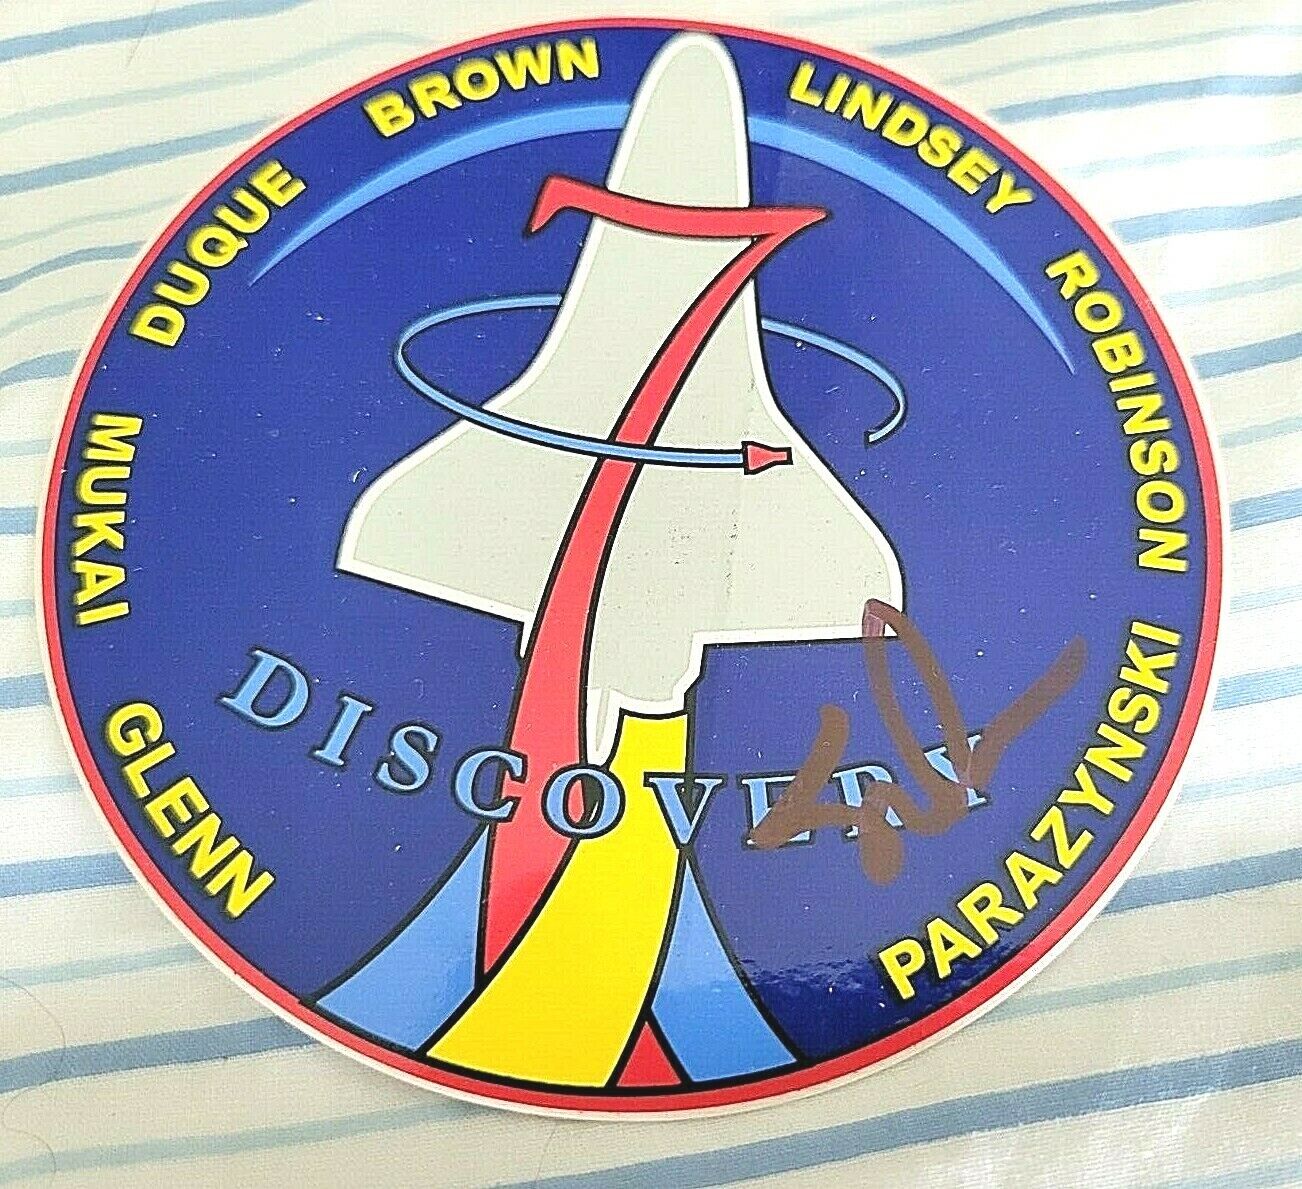 John Glenn Mission SCOTT PARAZYNSKI NASA astronaut SIGNED STS-95 Decal BECKETT